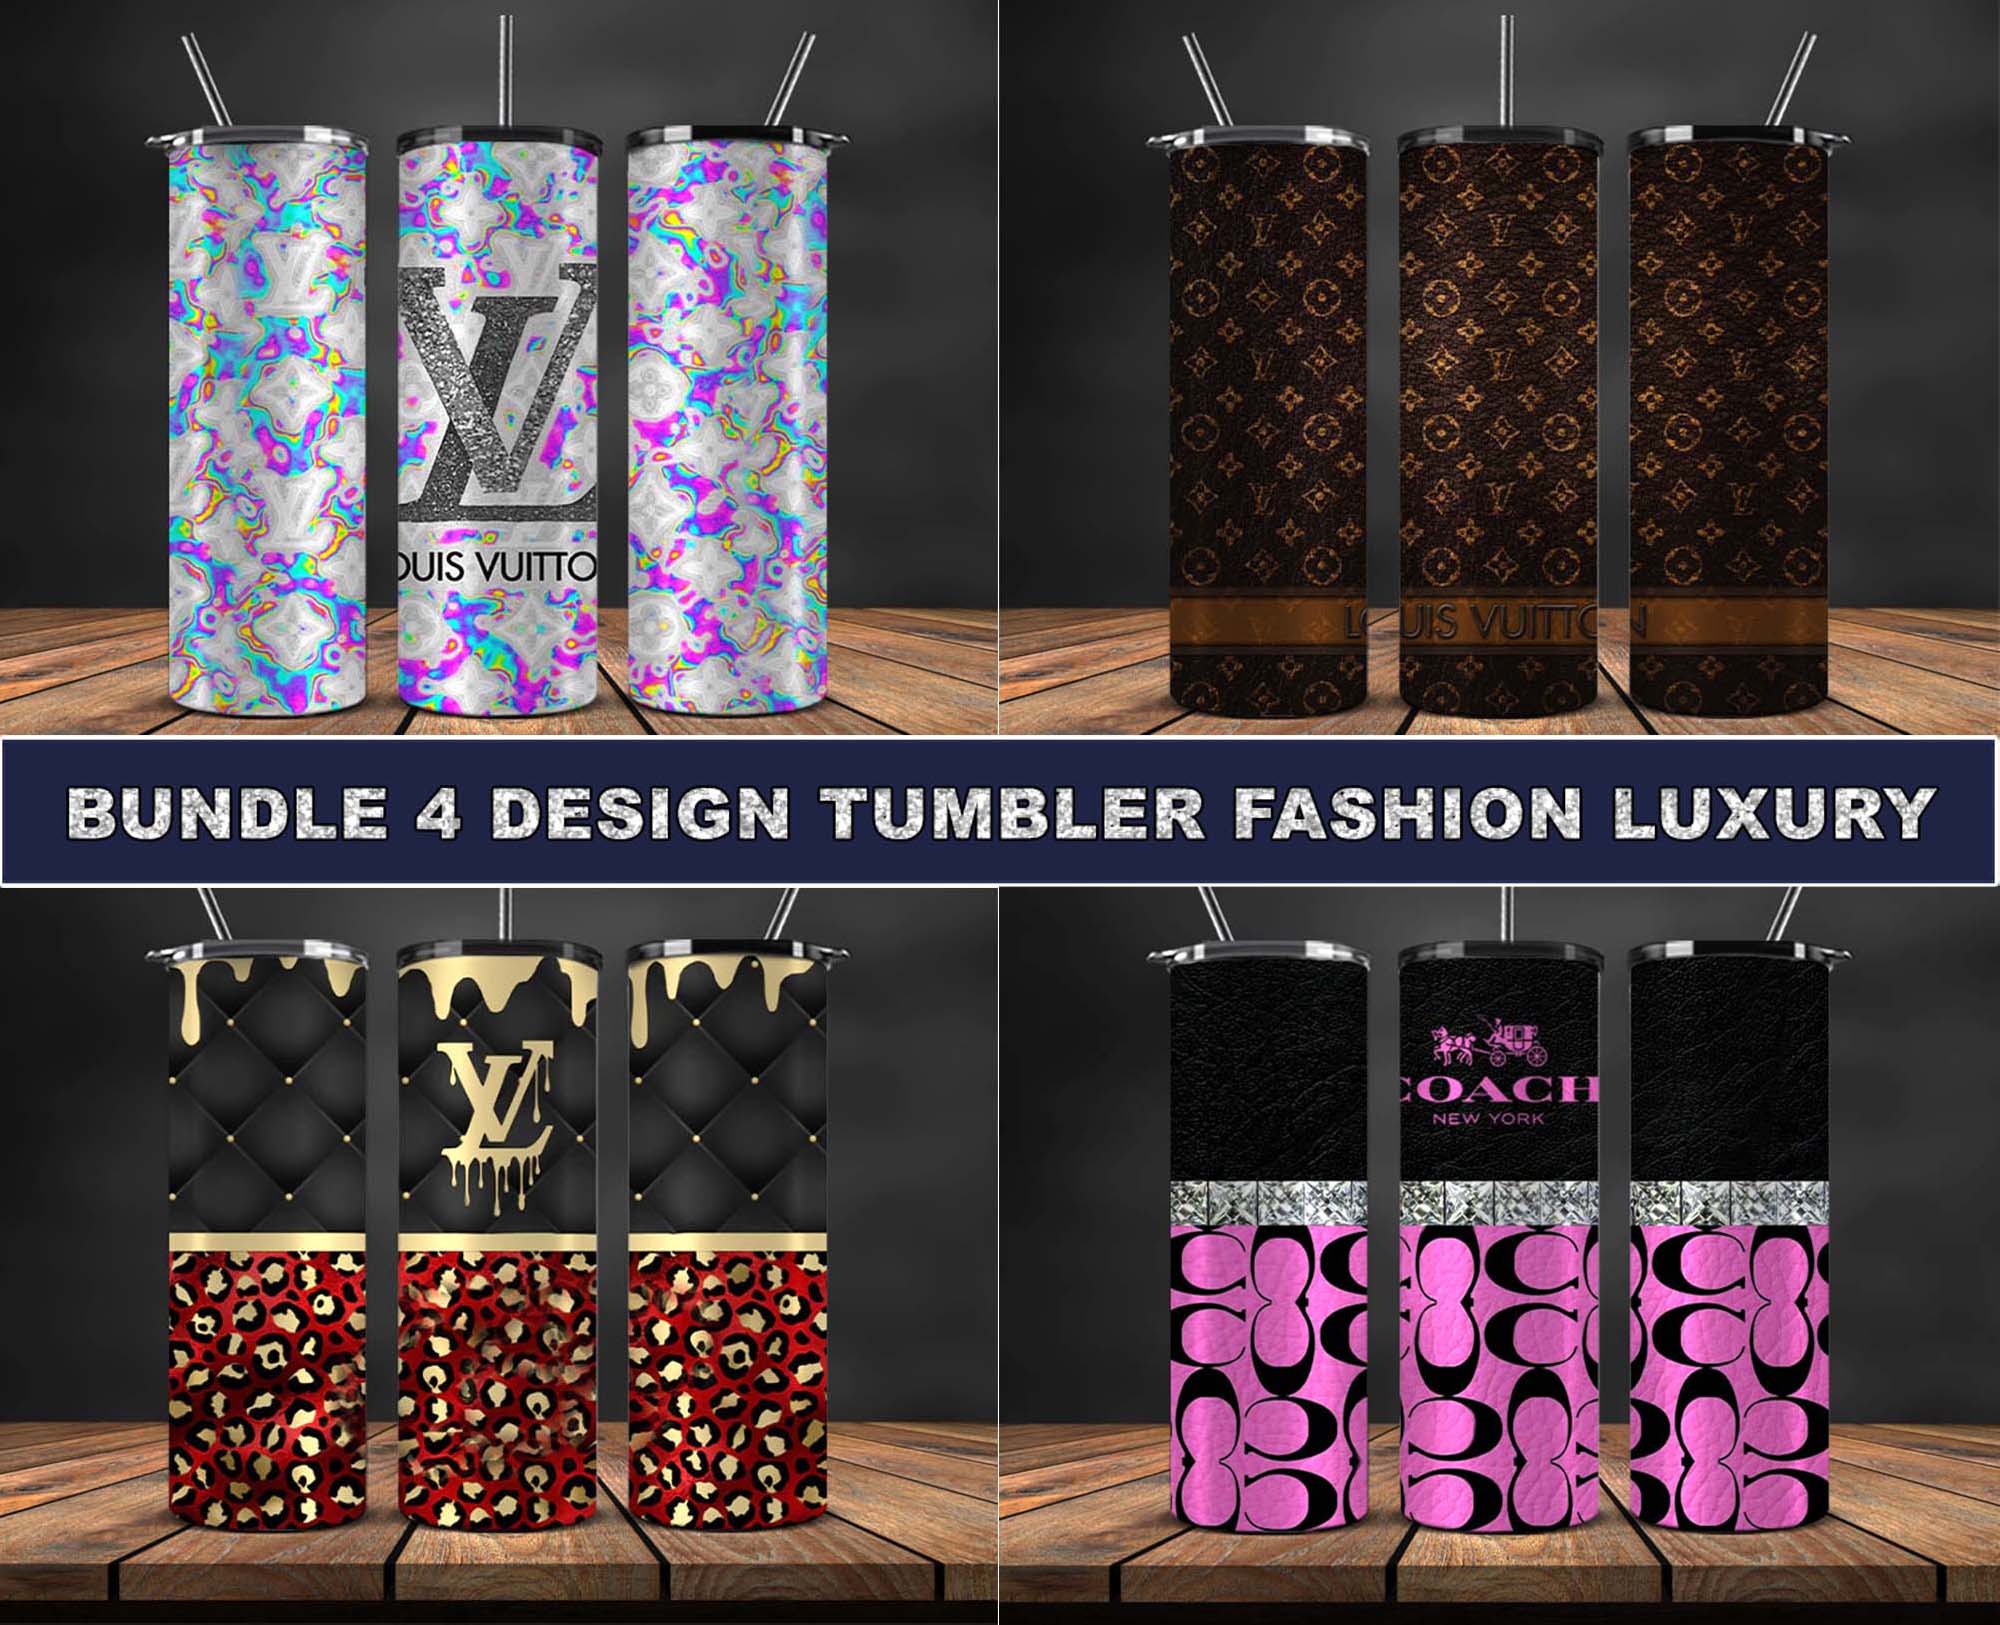 Brand Logo Tumbler Wrap , Logo Gucci ,Dior,Louis Vuitton,Chanel, Coach  Brand Tumbler Wrap 02